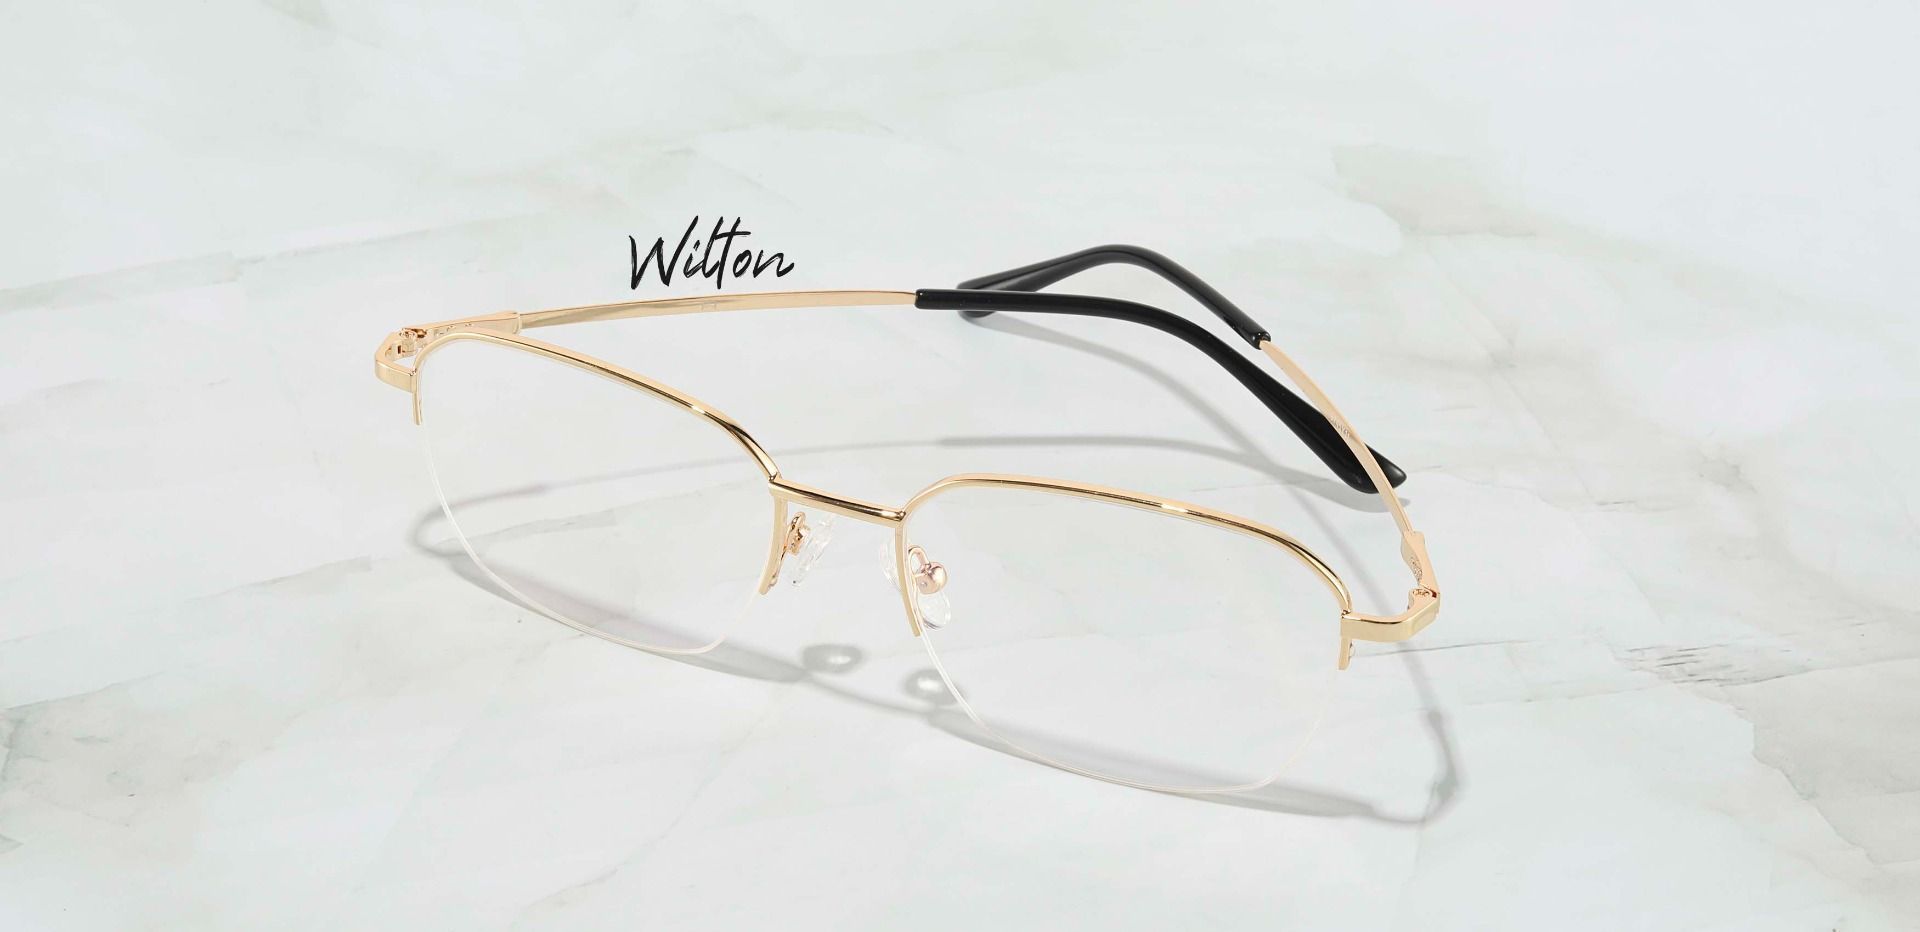 Wilton Geometric Reading Glasses - Gold